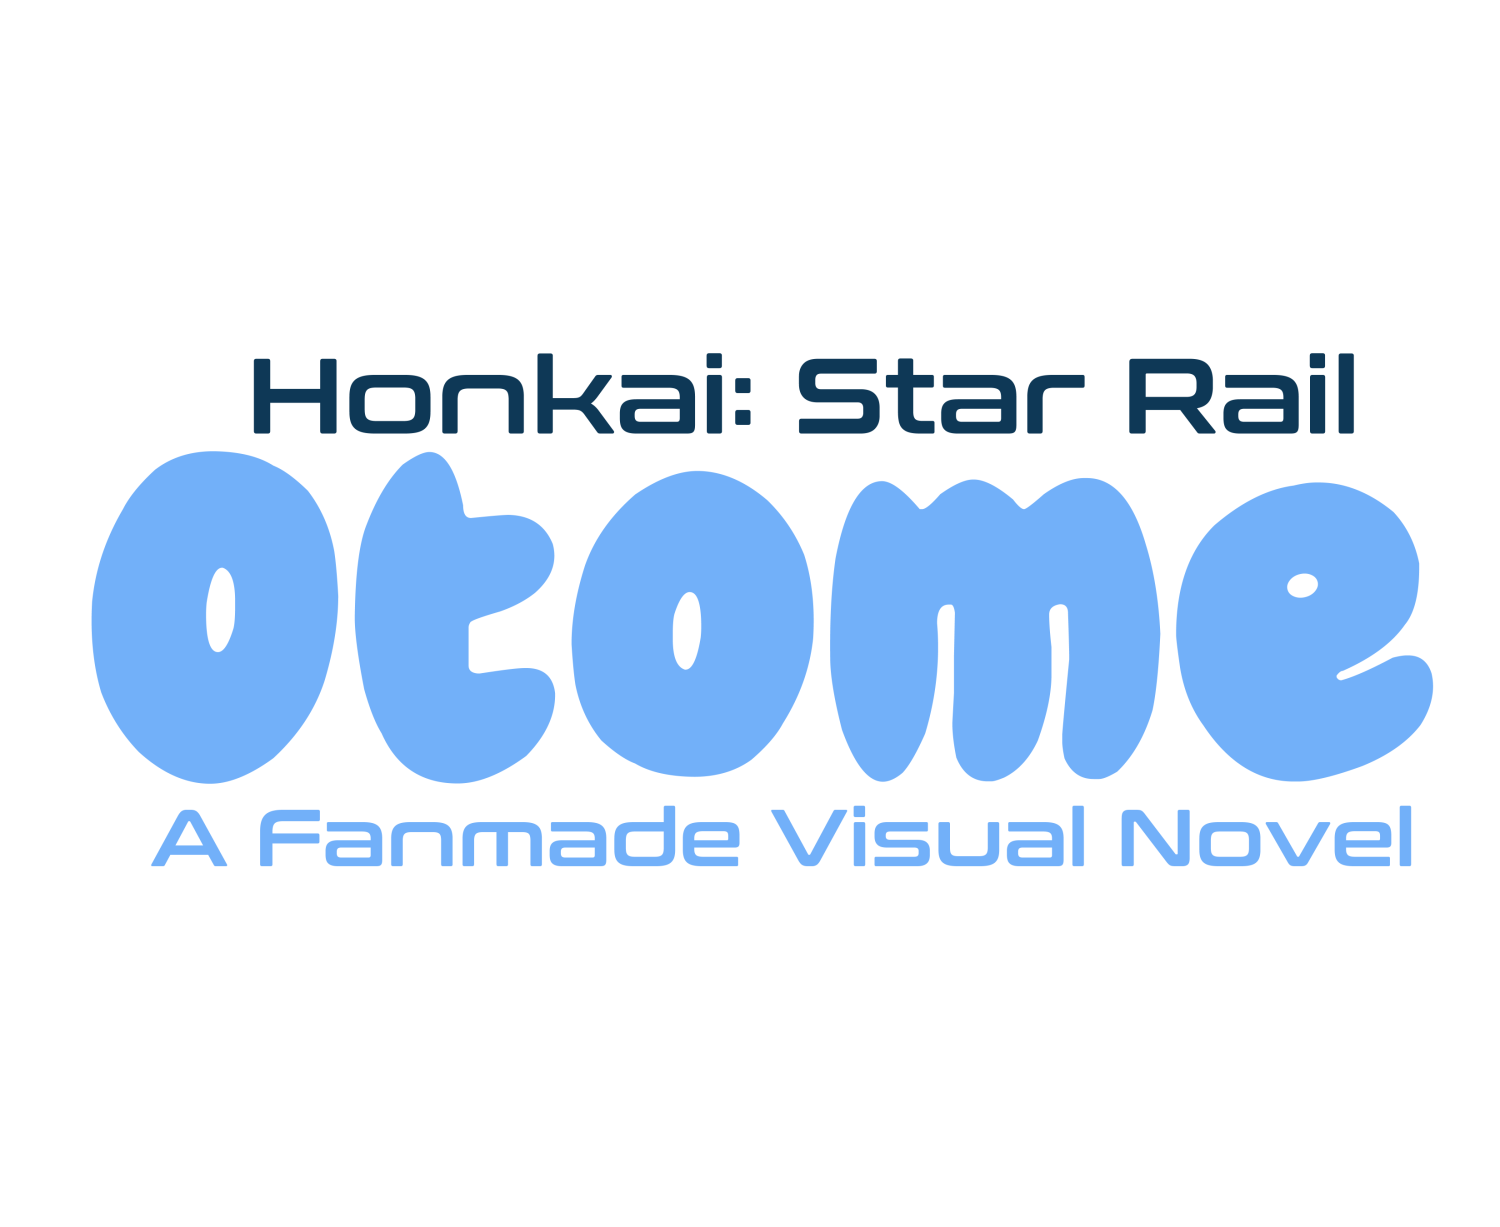 Honkai: Star Rail Otome Fangame